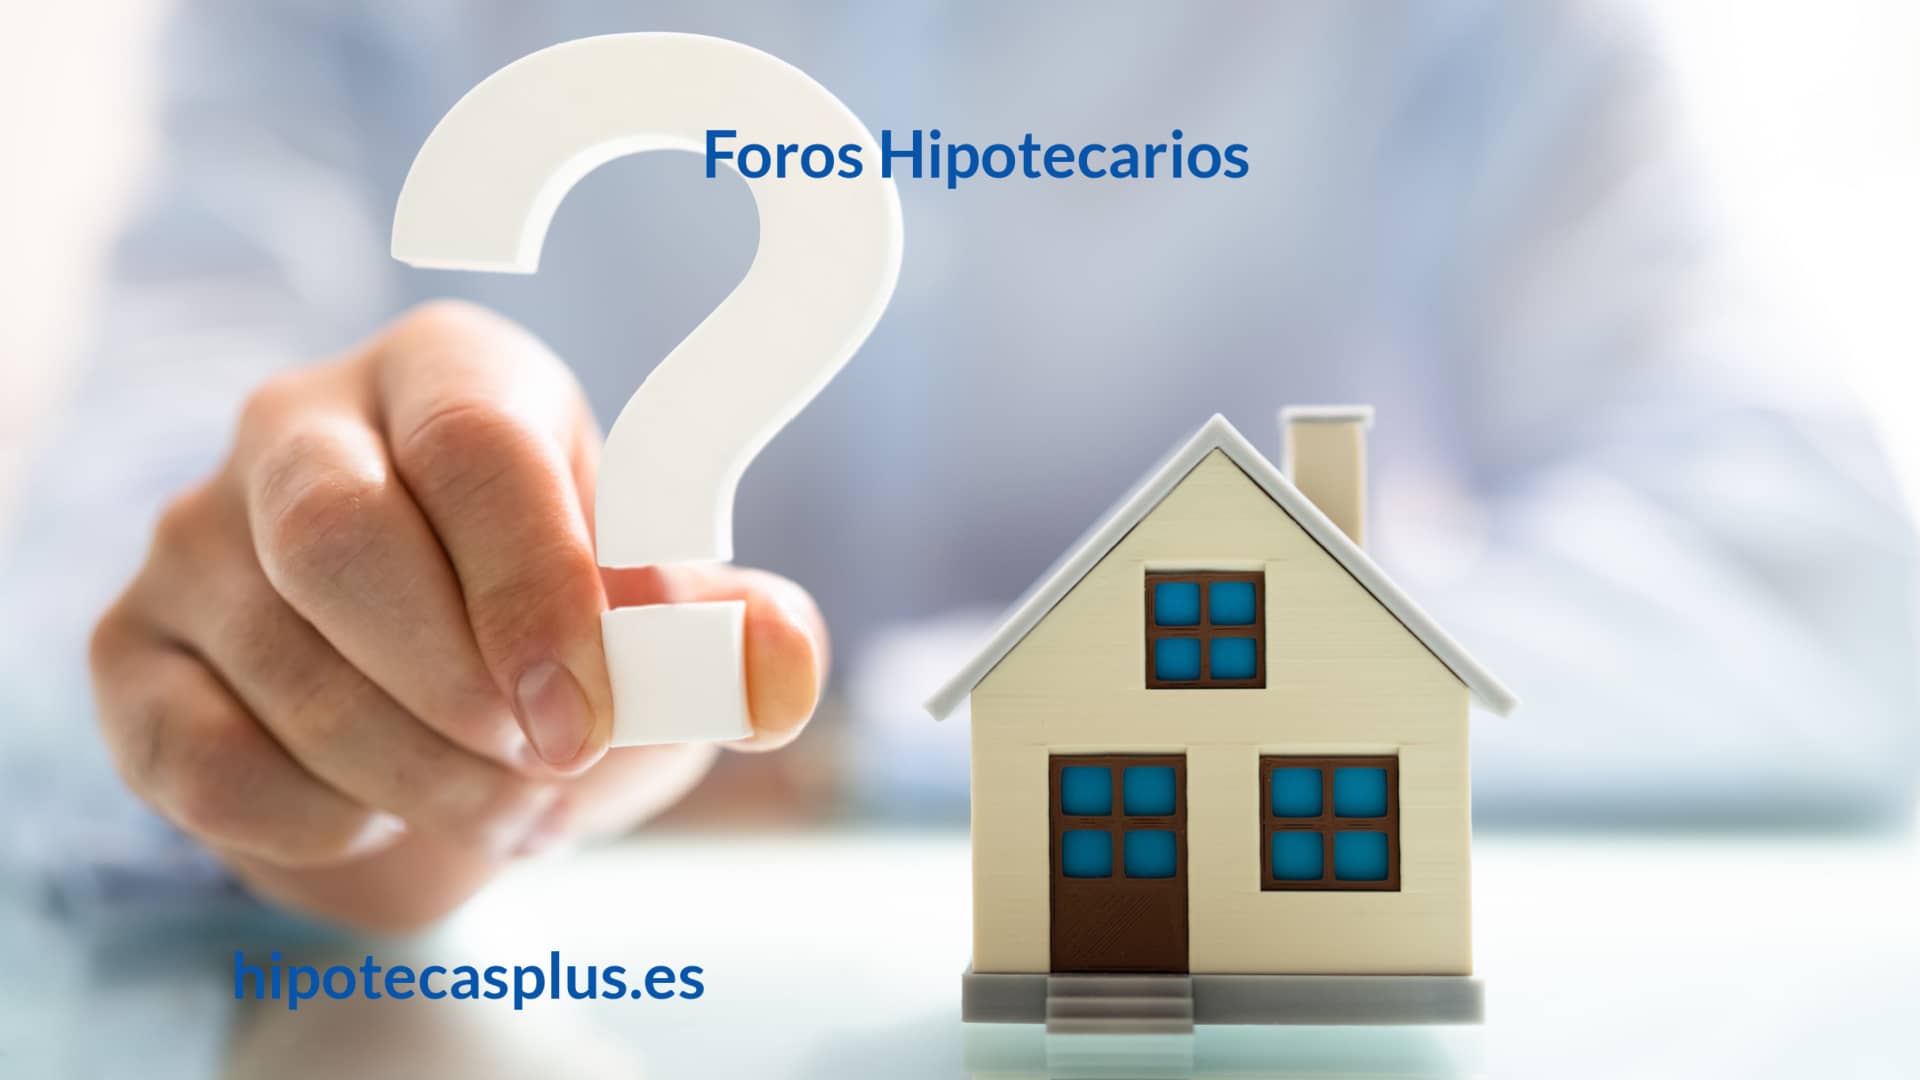 https://www.hipotecasplus.es/wp-content/uploads/HipotecasPlus-Foros-Hipotecarios1-250x250.jpg